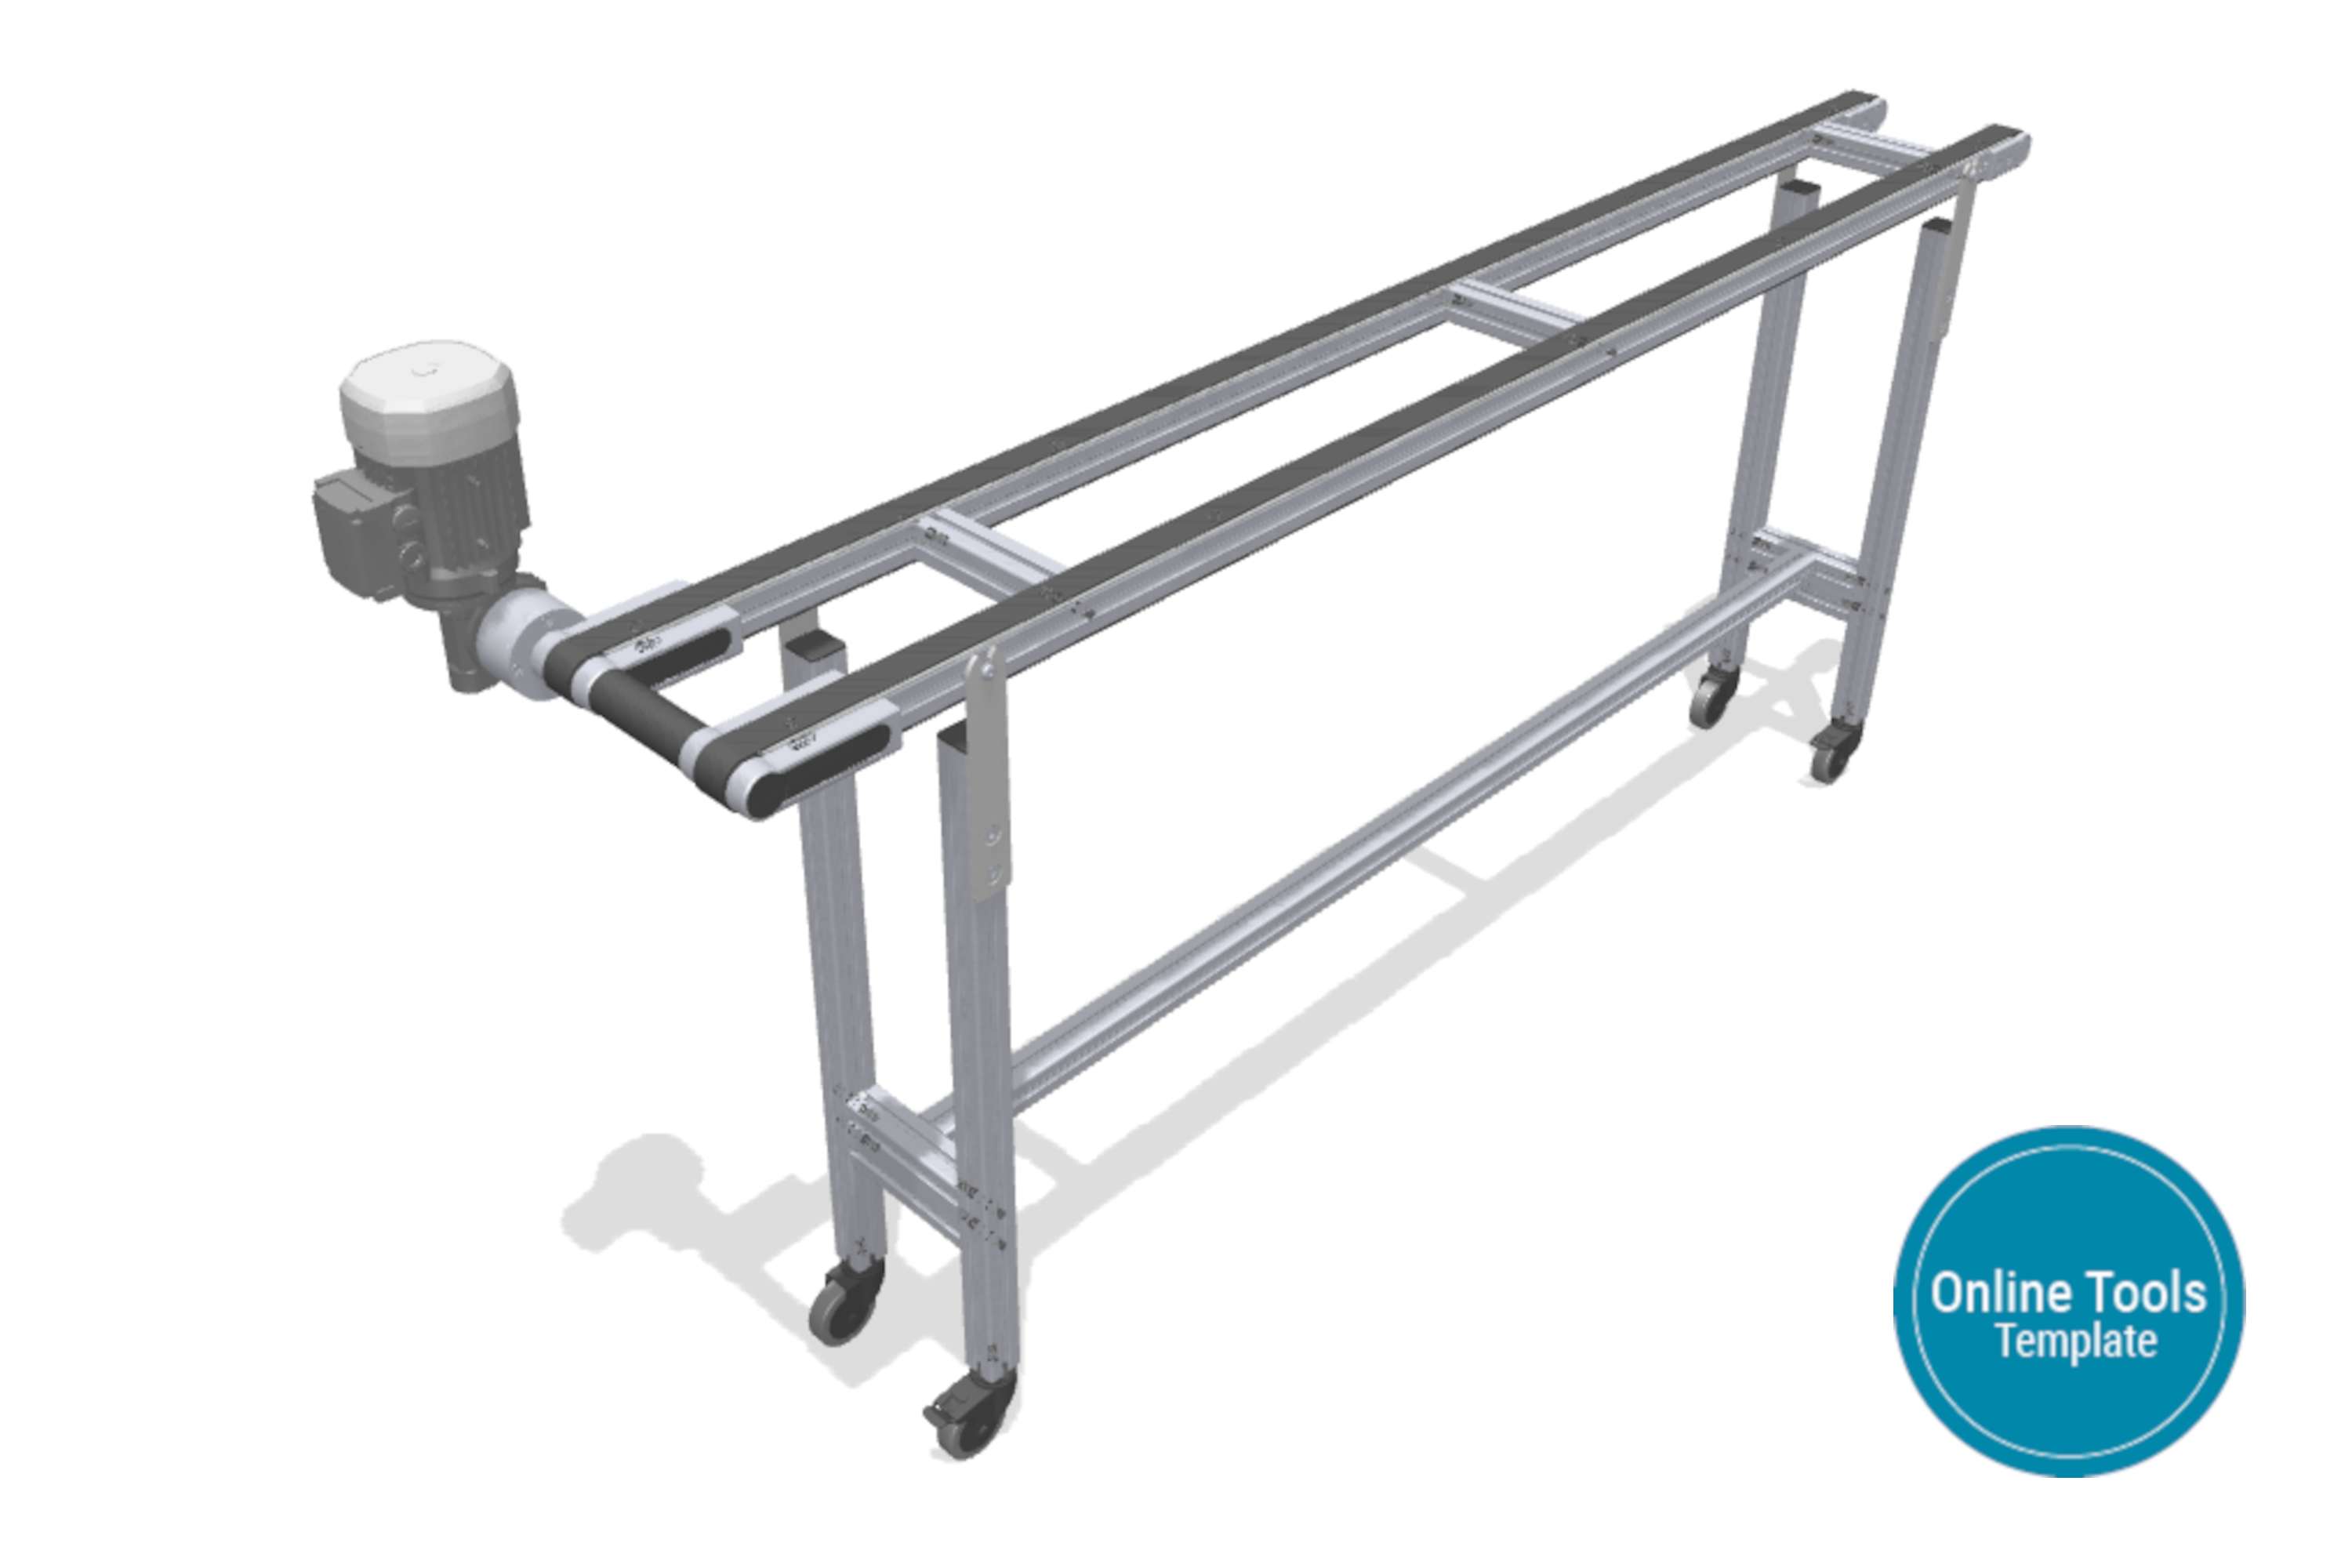 Basic model Double Flat Belt Conveyor - accumulating and ESD-safe